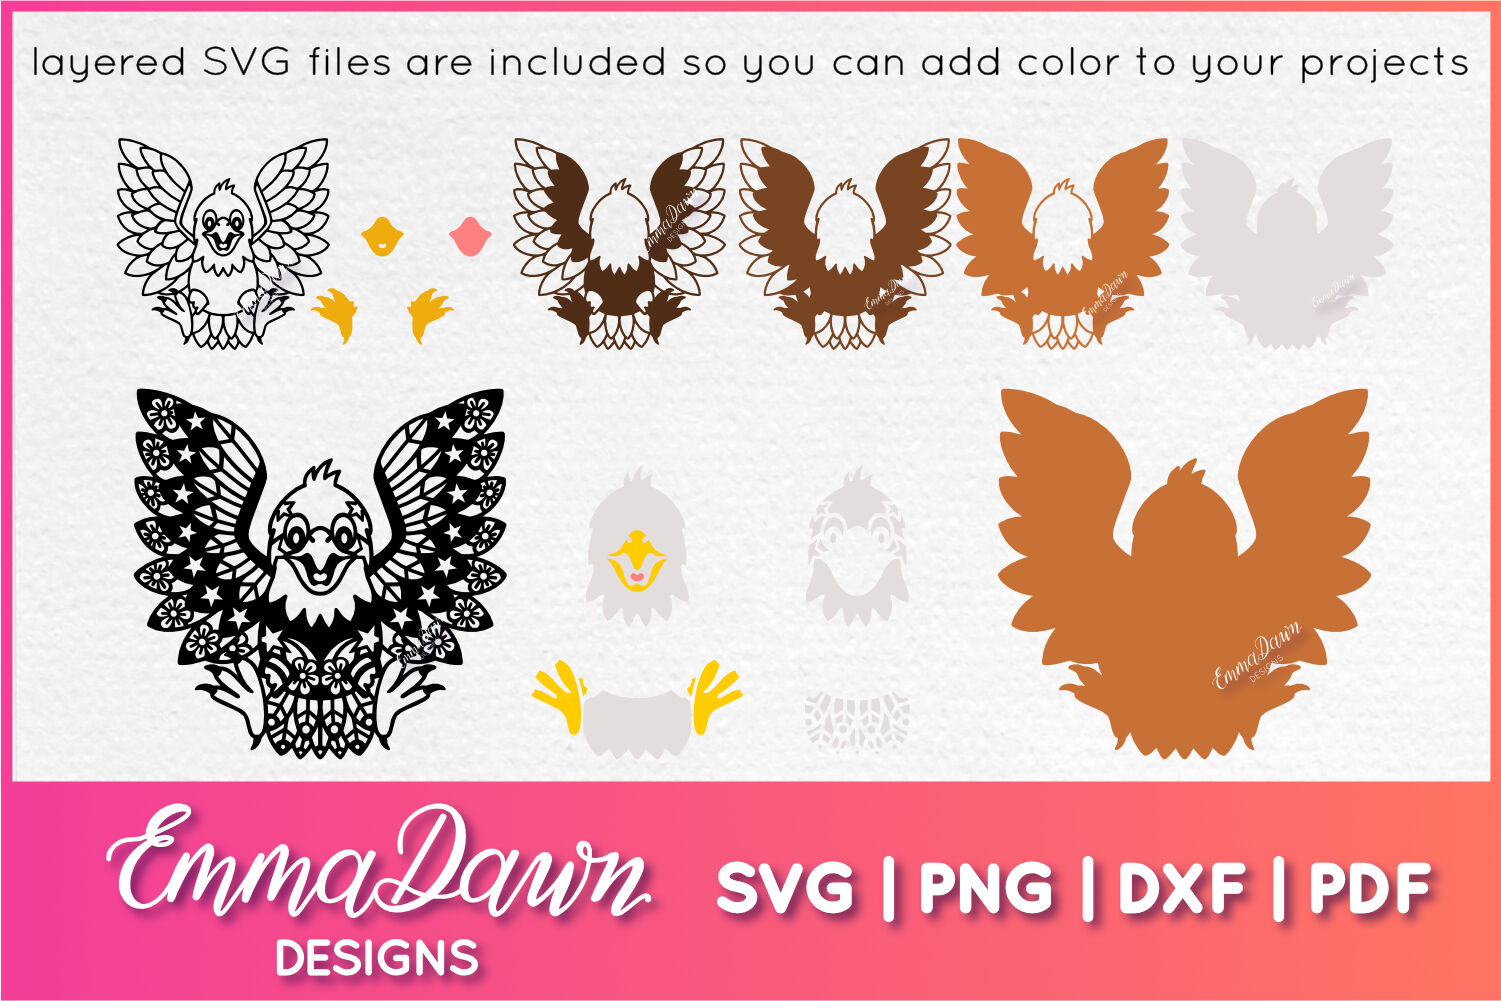 Download Earl The Eagle Svg Dxf Fcm Png Pdf Mandala Zentangle Design By Emma Dawn Designs Thehungryjpeg Com